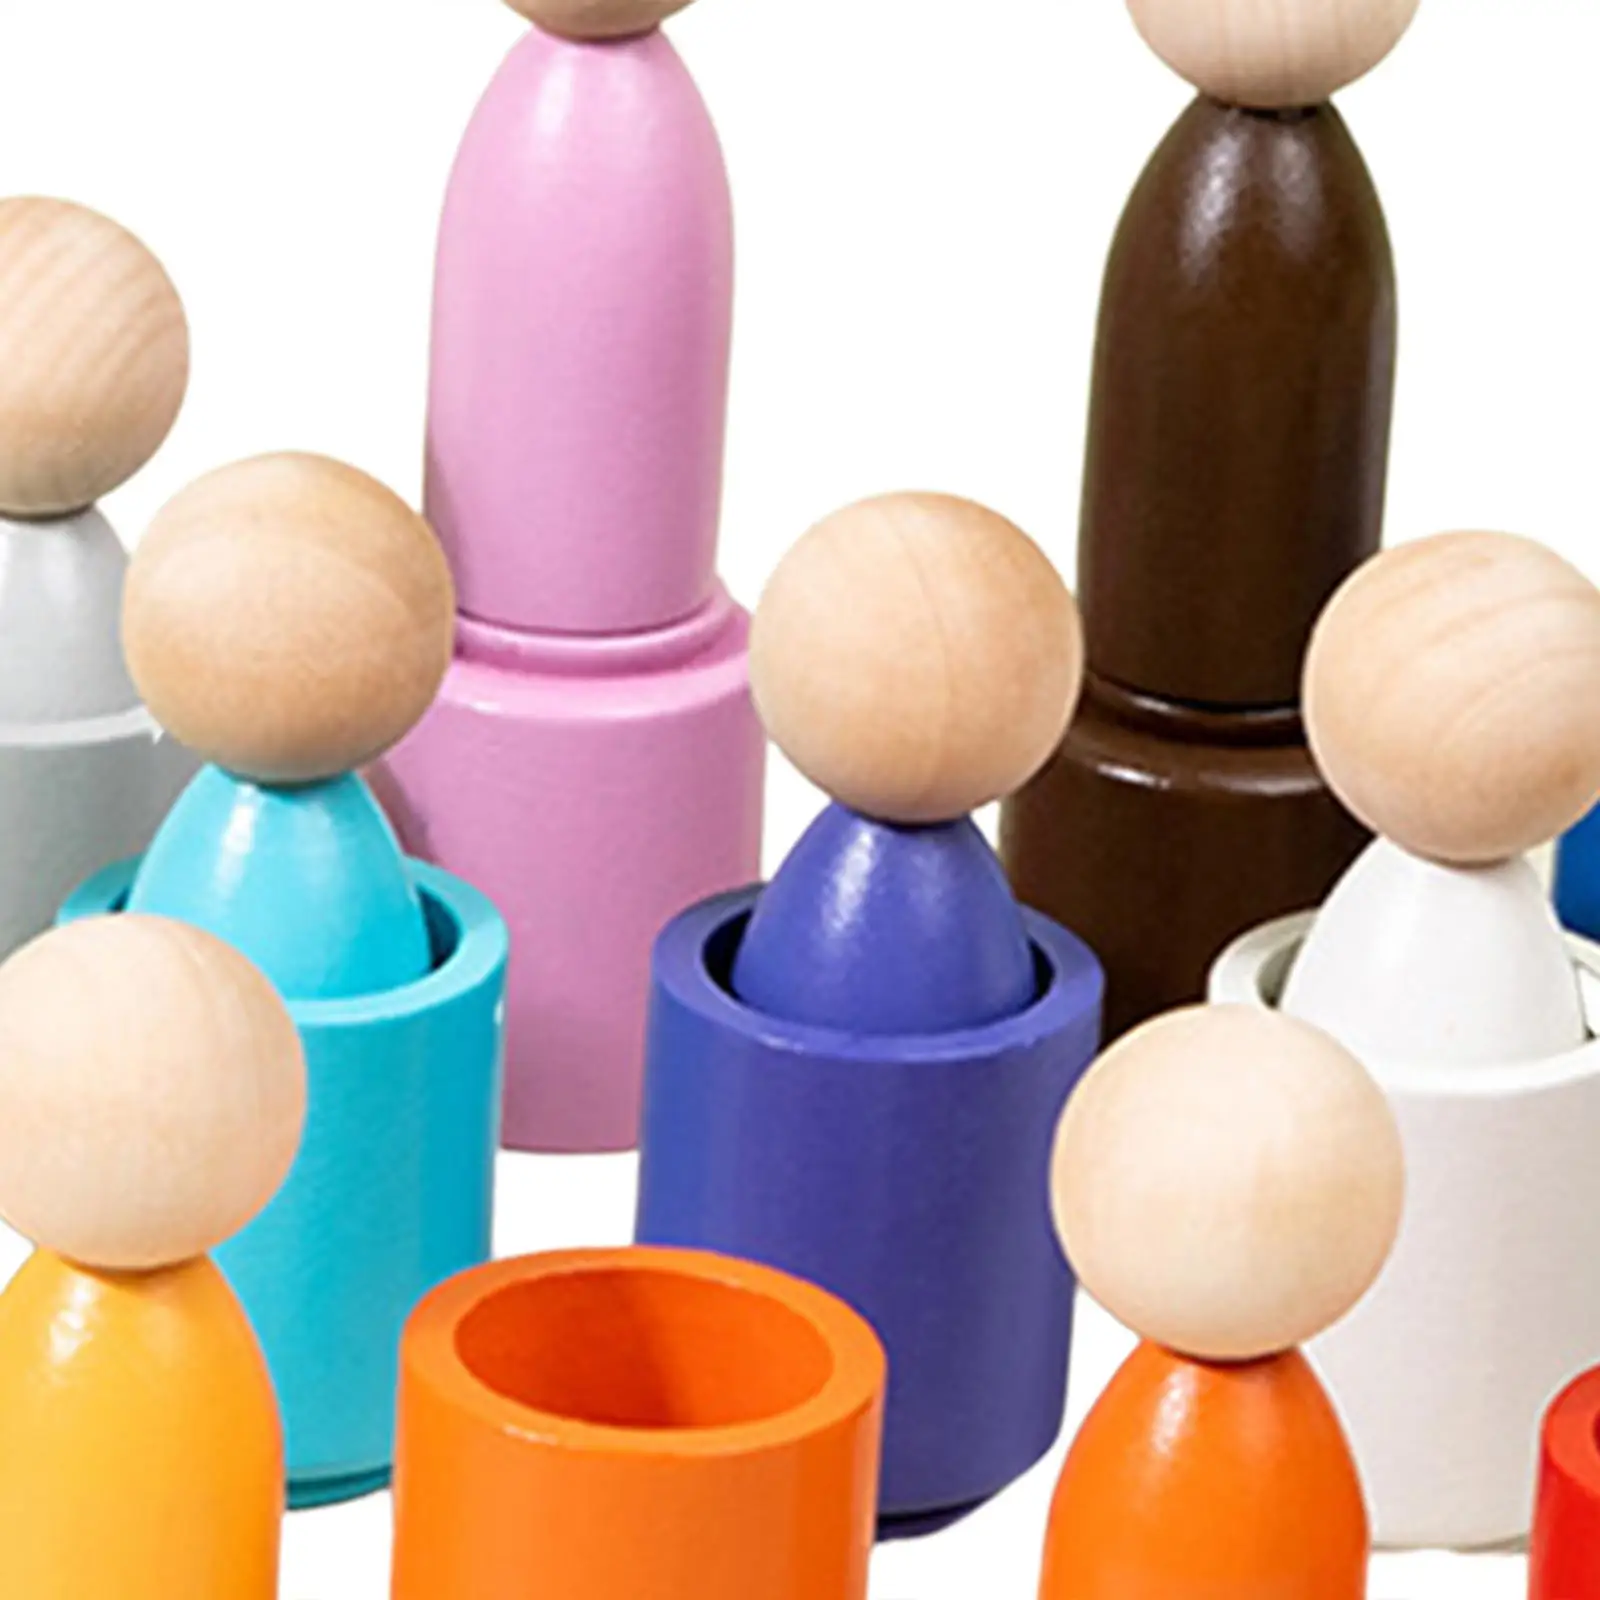 Wooden Sorter Game Color Sorting Peg Dolls for Girls Kids Birthday Gifts